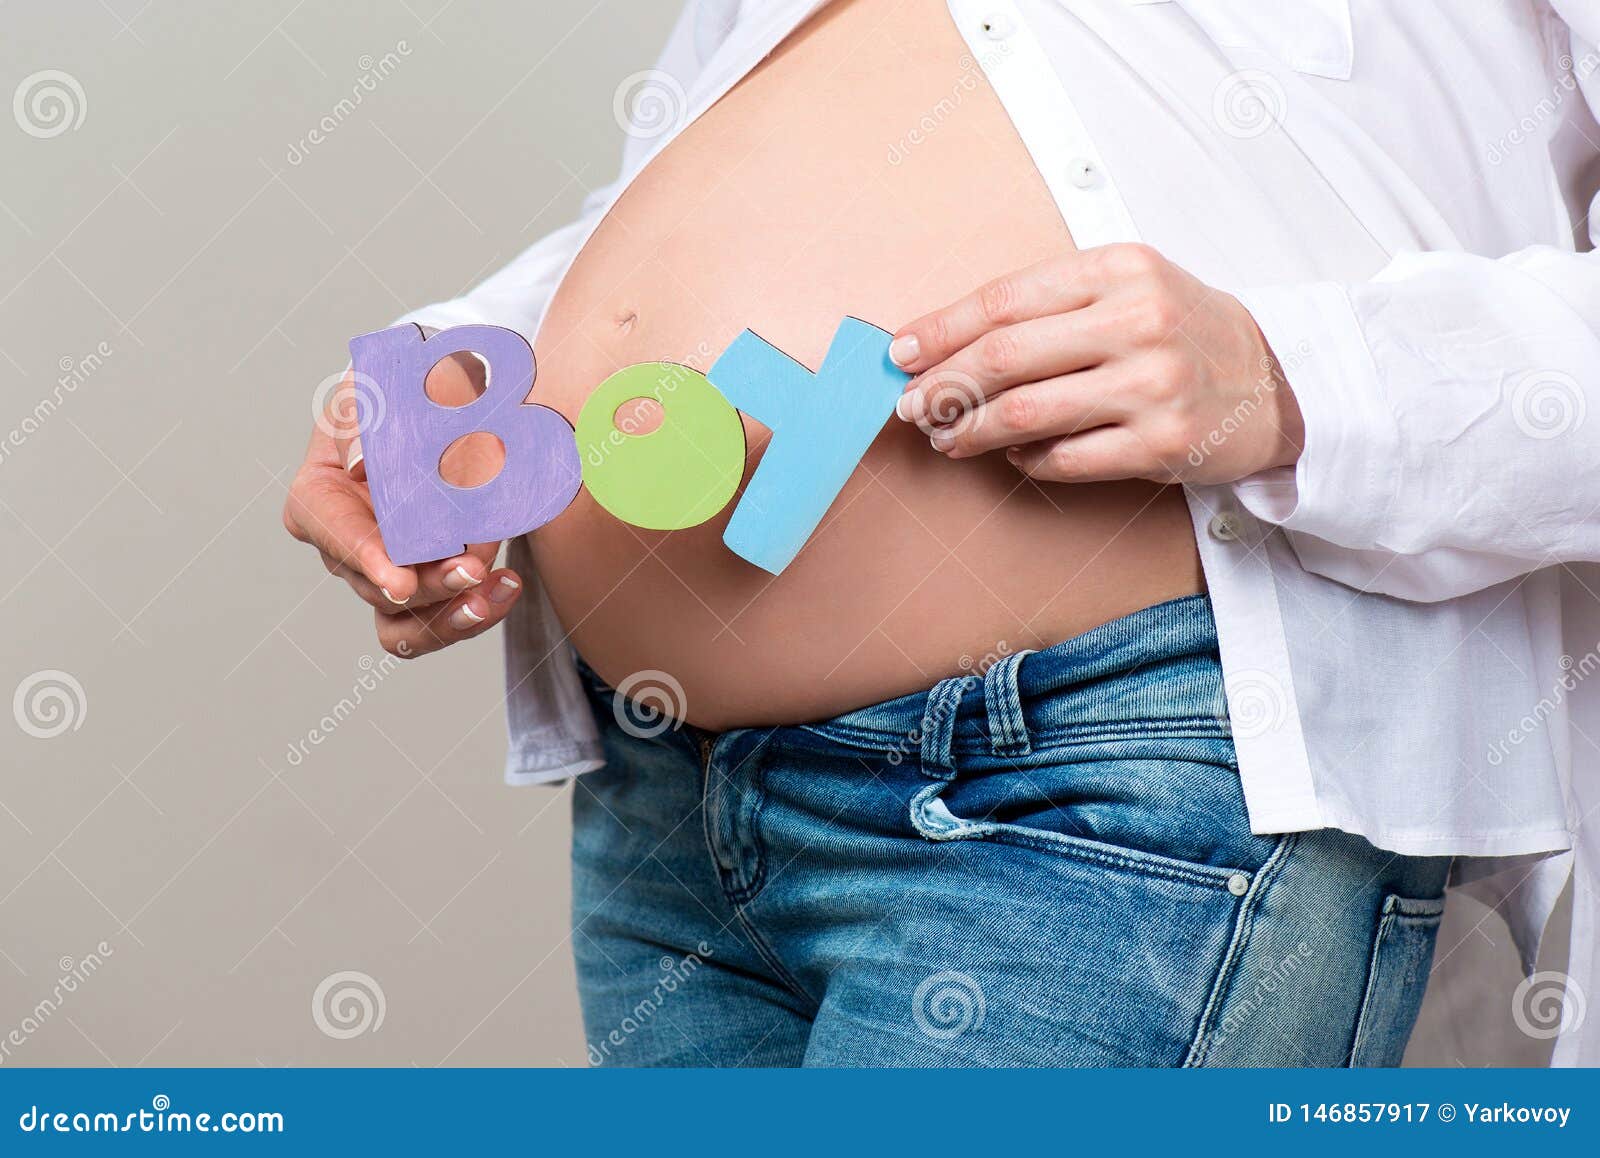 baby boy pregnancy belly